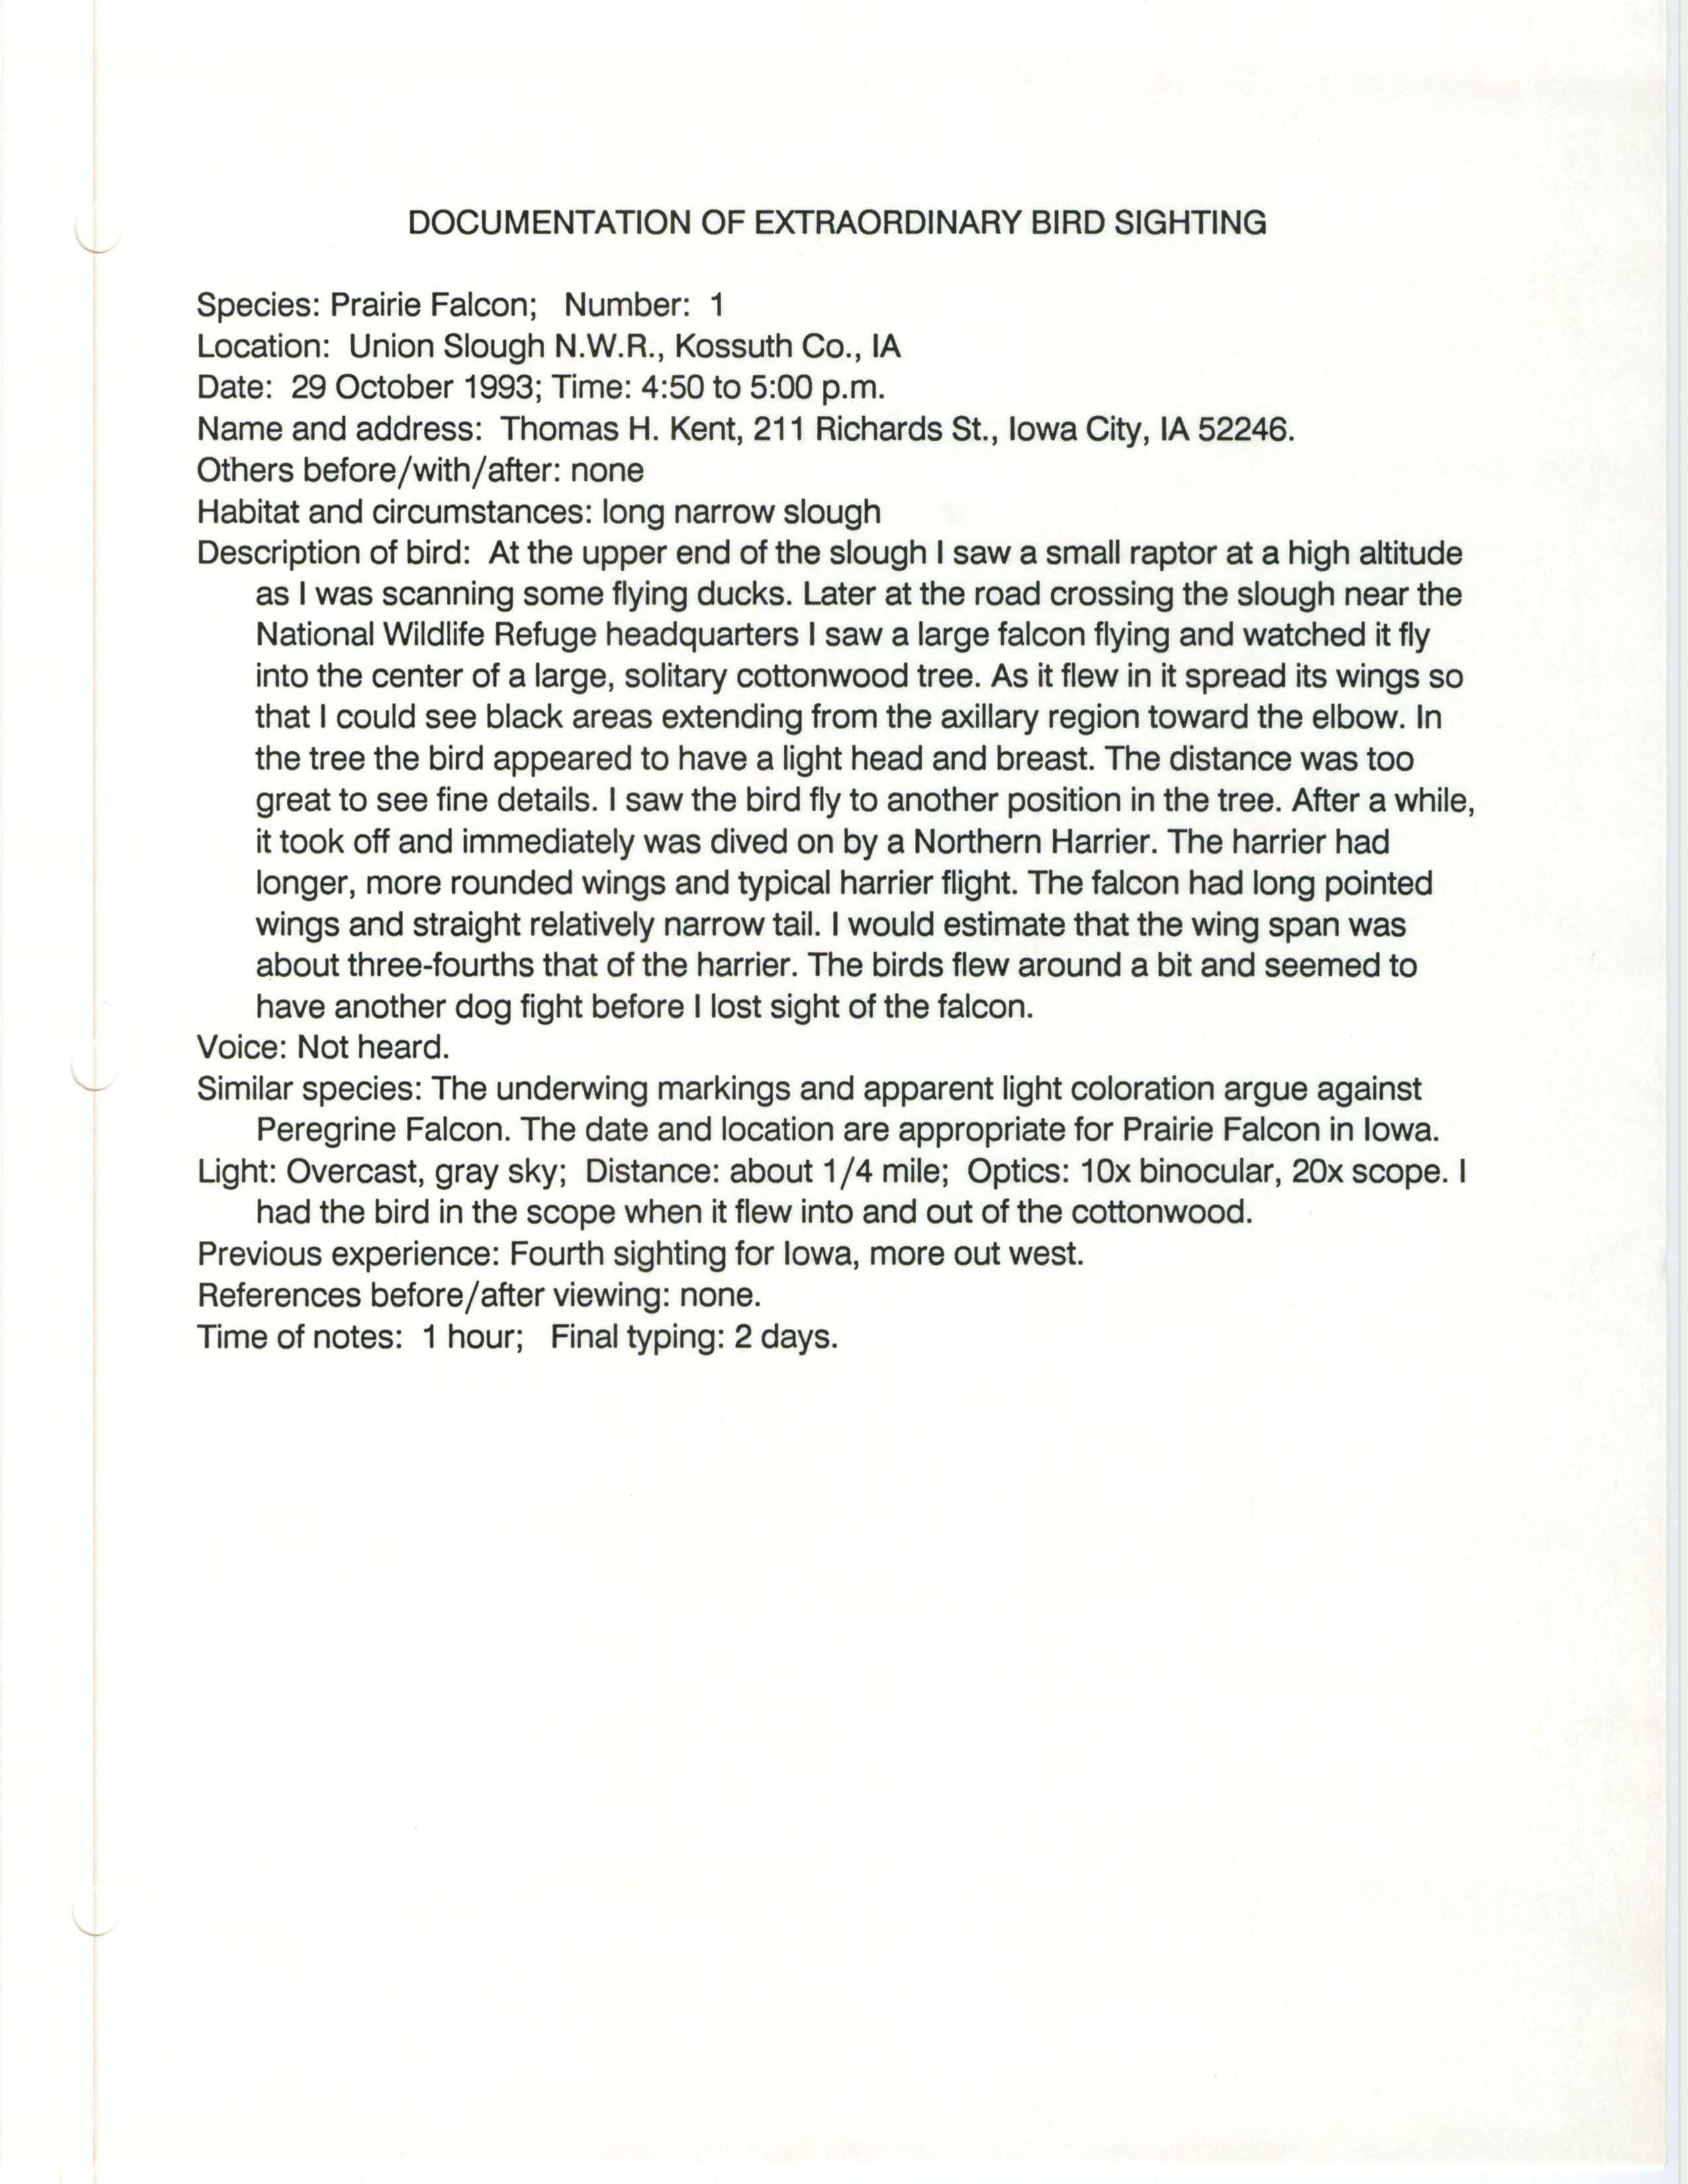 Rare bird documentation form for Prairie Falcon at Union Slough National Wildlife Refuge, 1993